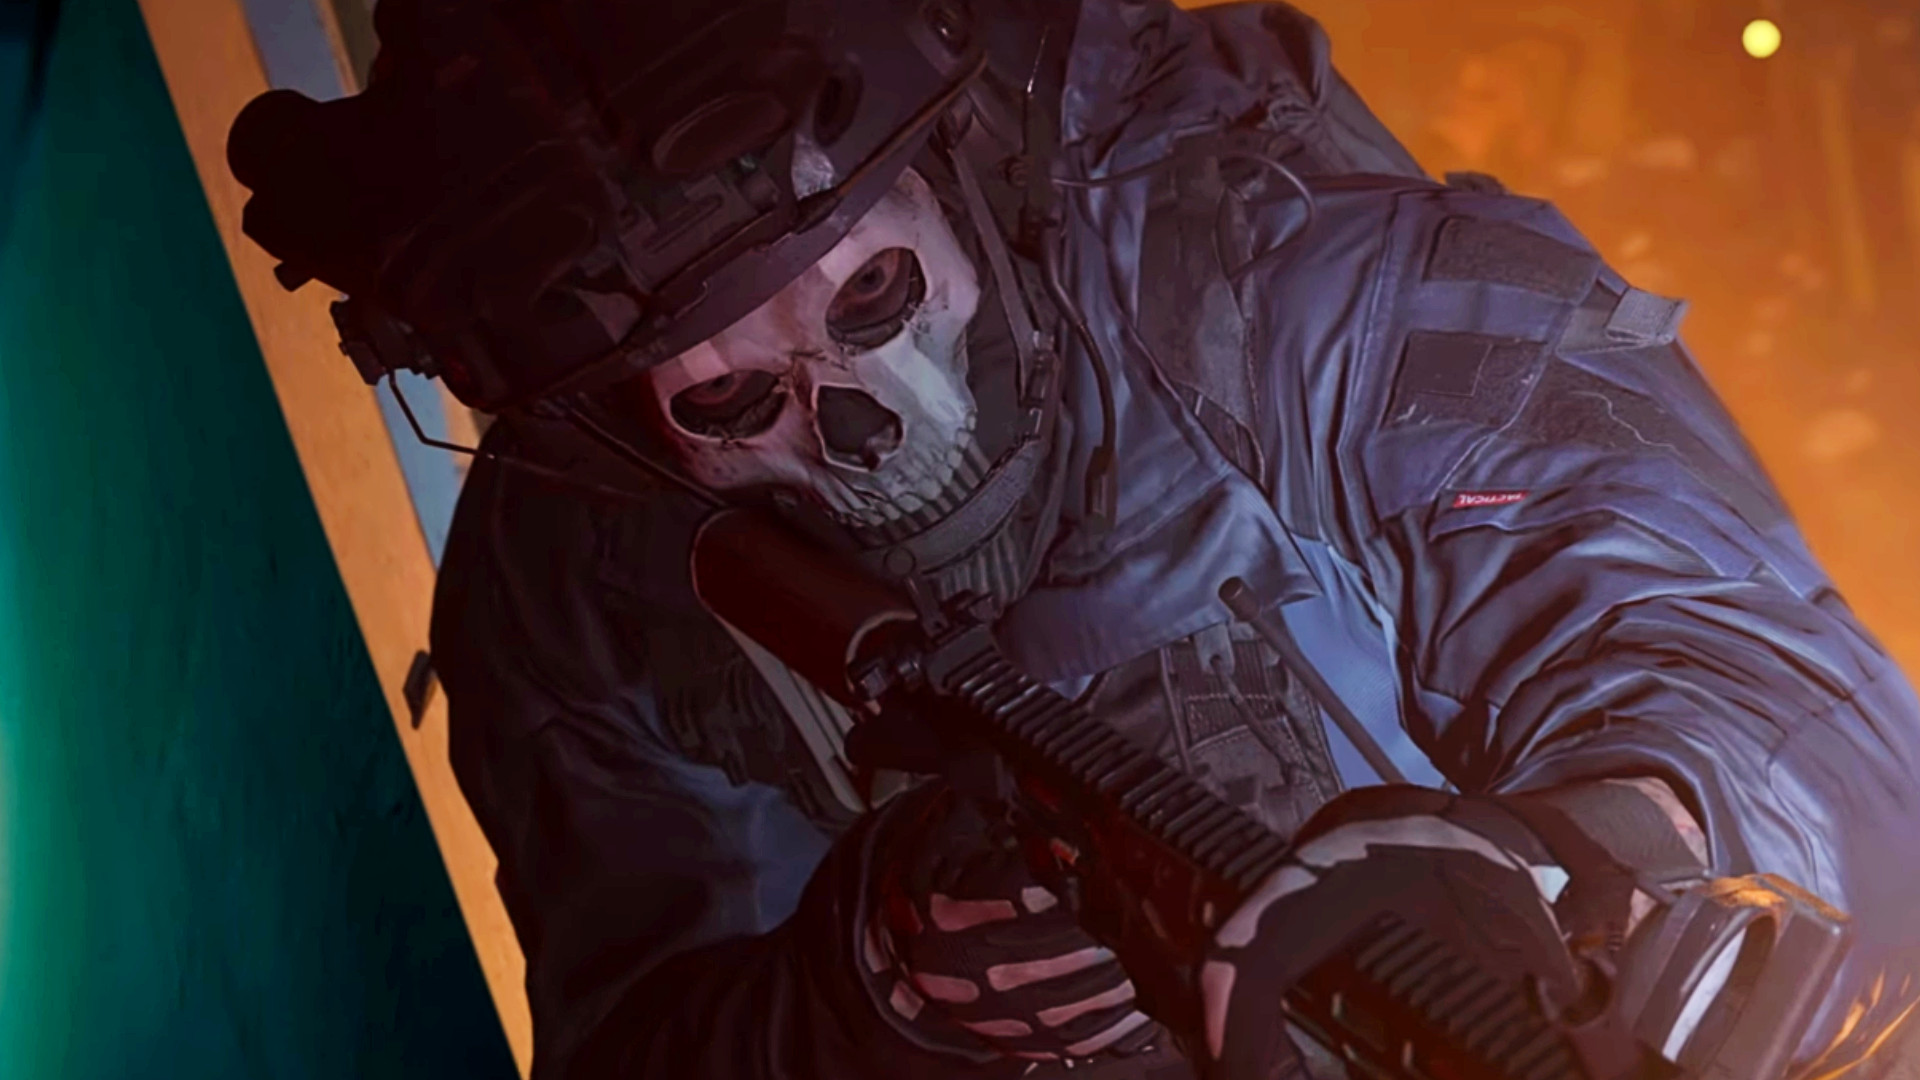 Official Call of Duty®: Modern Warfare® - Launch Gameplay Trailer